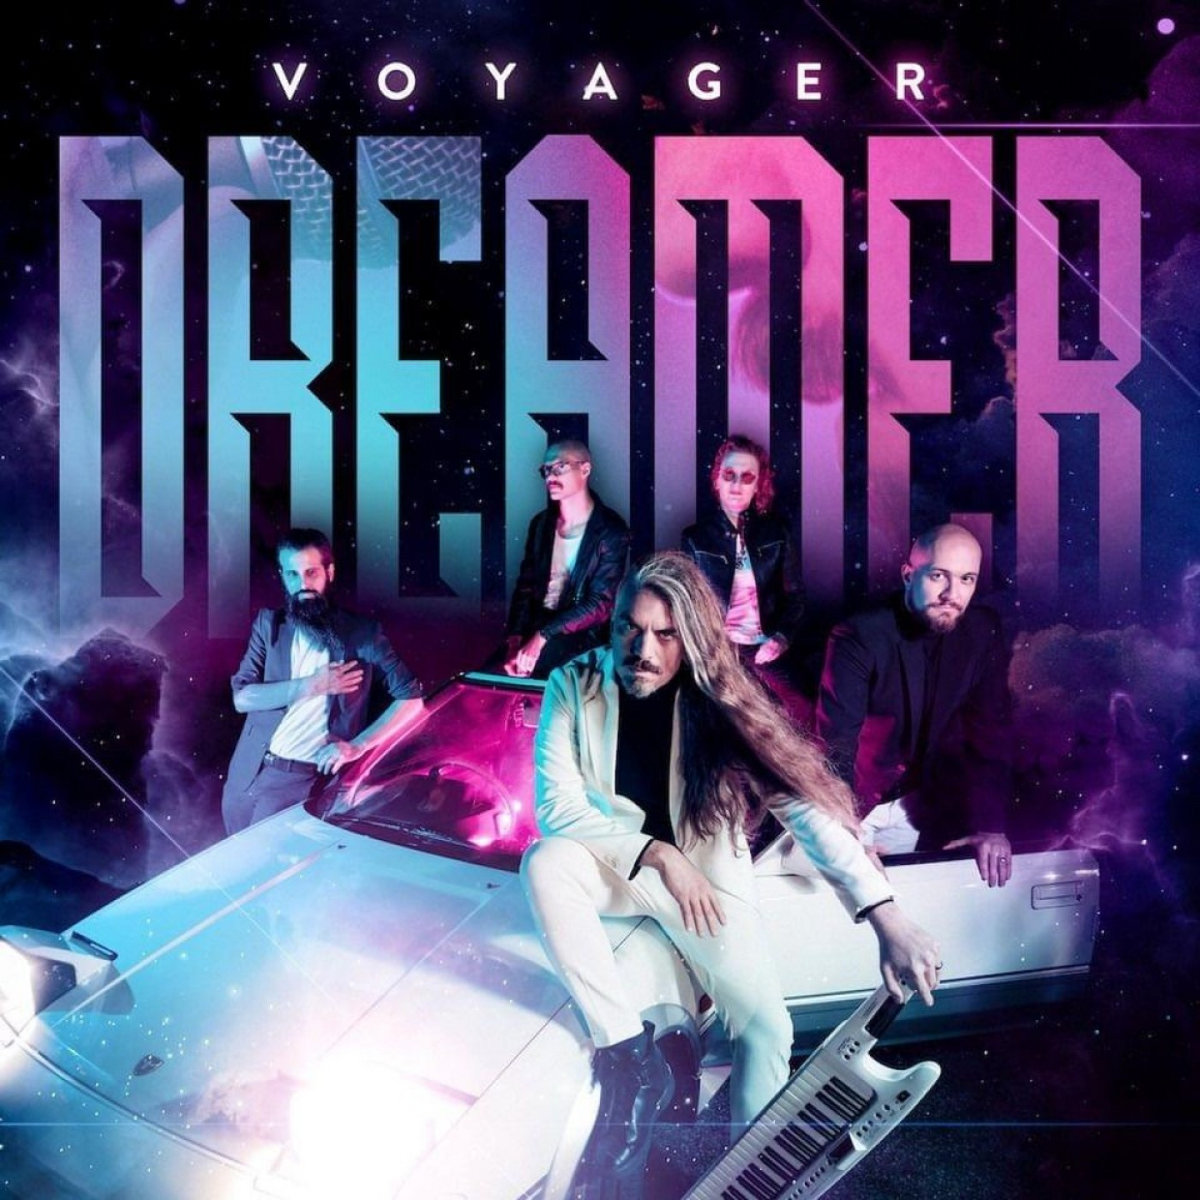 Voyager Dreamer cover artwork